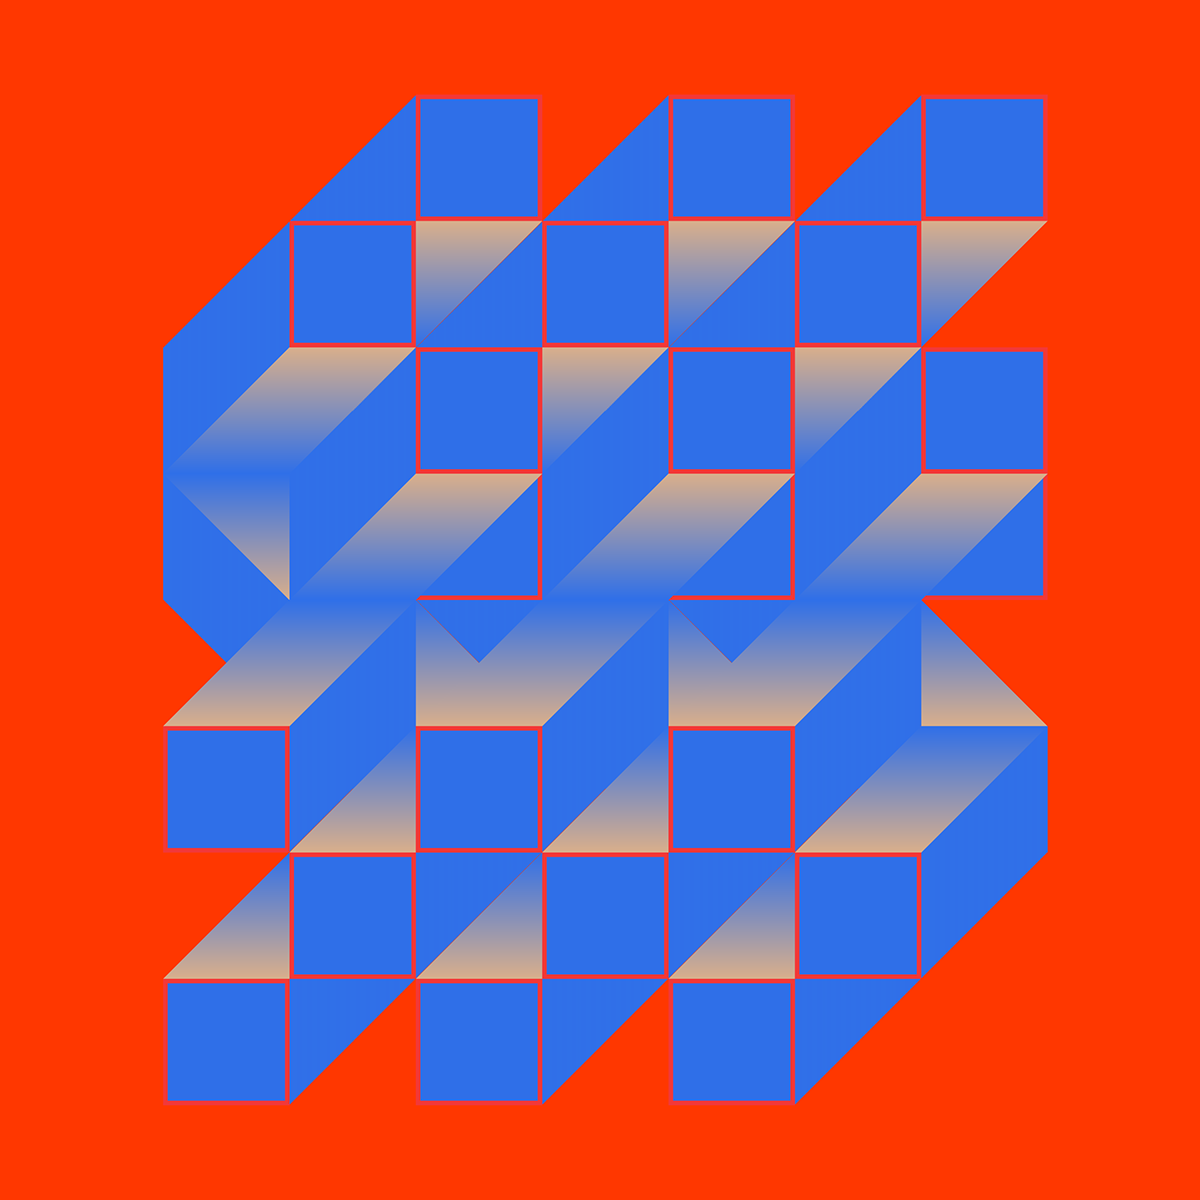 geometric abstract modern architecture visualization structural design graphic art visual design poster album art